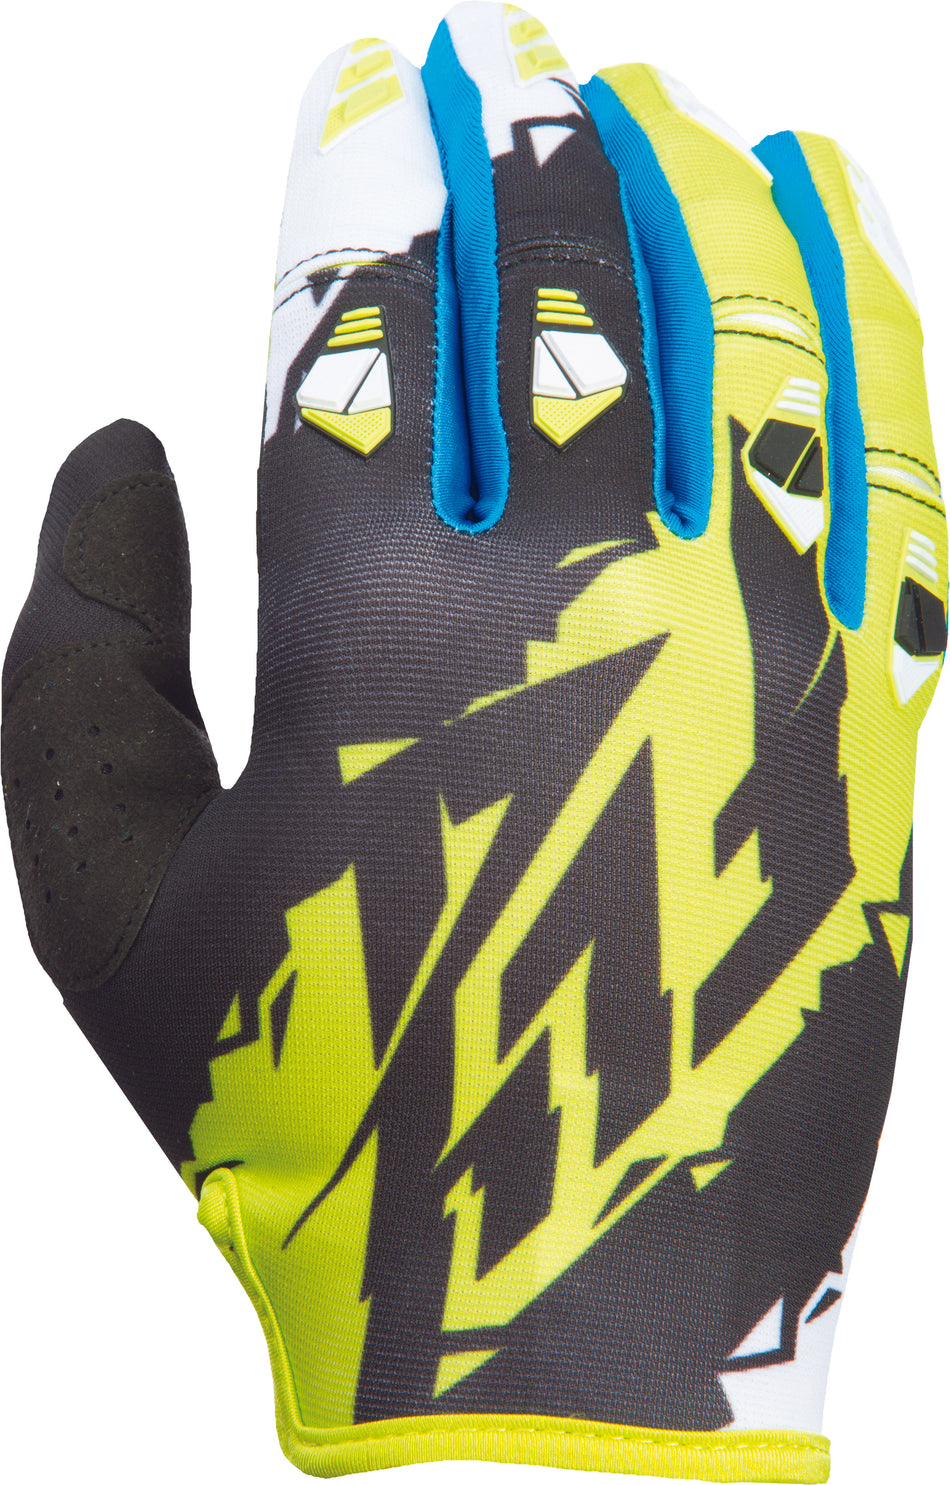 FLY RACING Kinetic Glove Black/Lime Sz 12 2x 370-41512